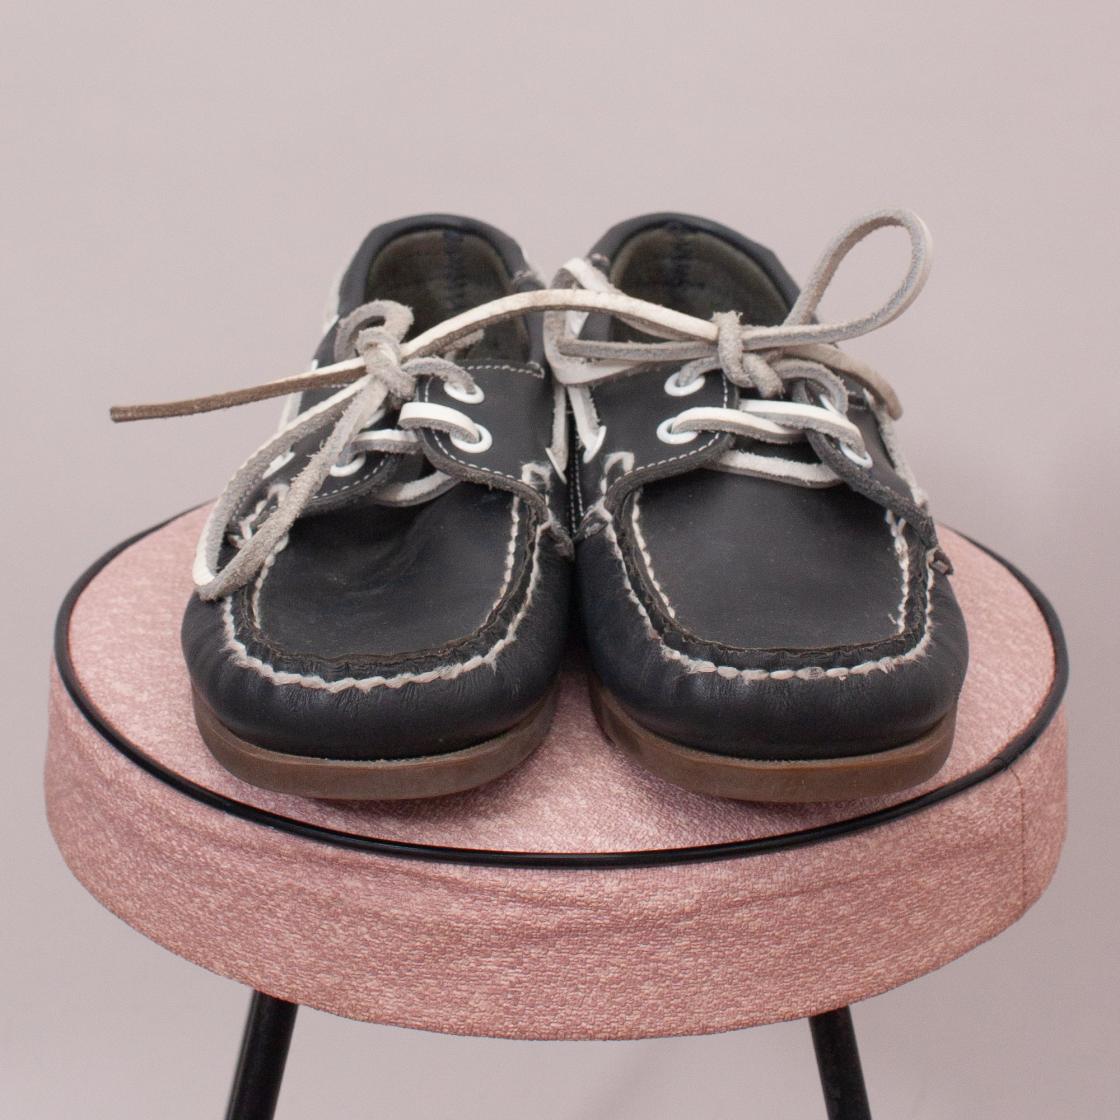 Walnut Charcoal Boat Shoes - EU 31